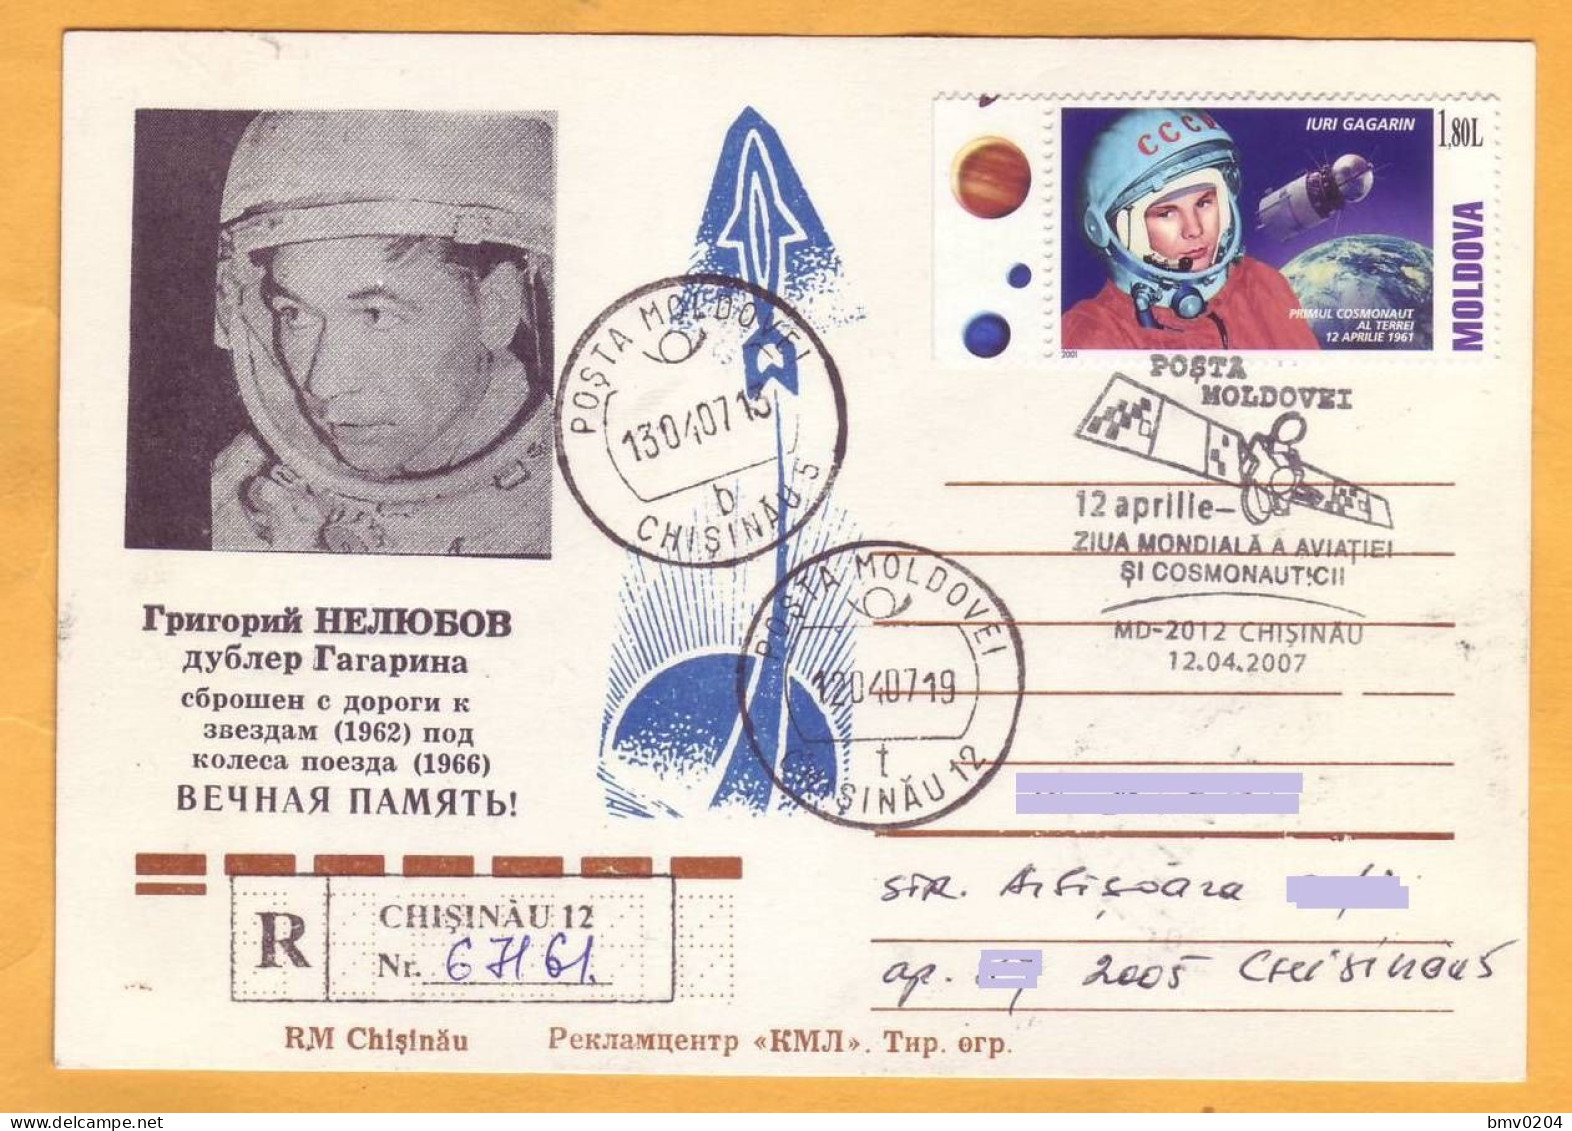 2007 Moldova Cover Special Cancellation "Day Of Aviation And Cosmonautics", Grigory NELYUBOV, Gagarin's Understudy - Moldova